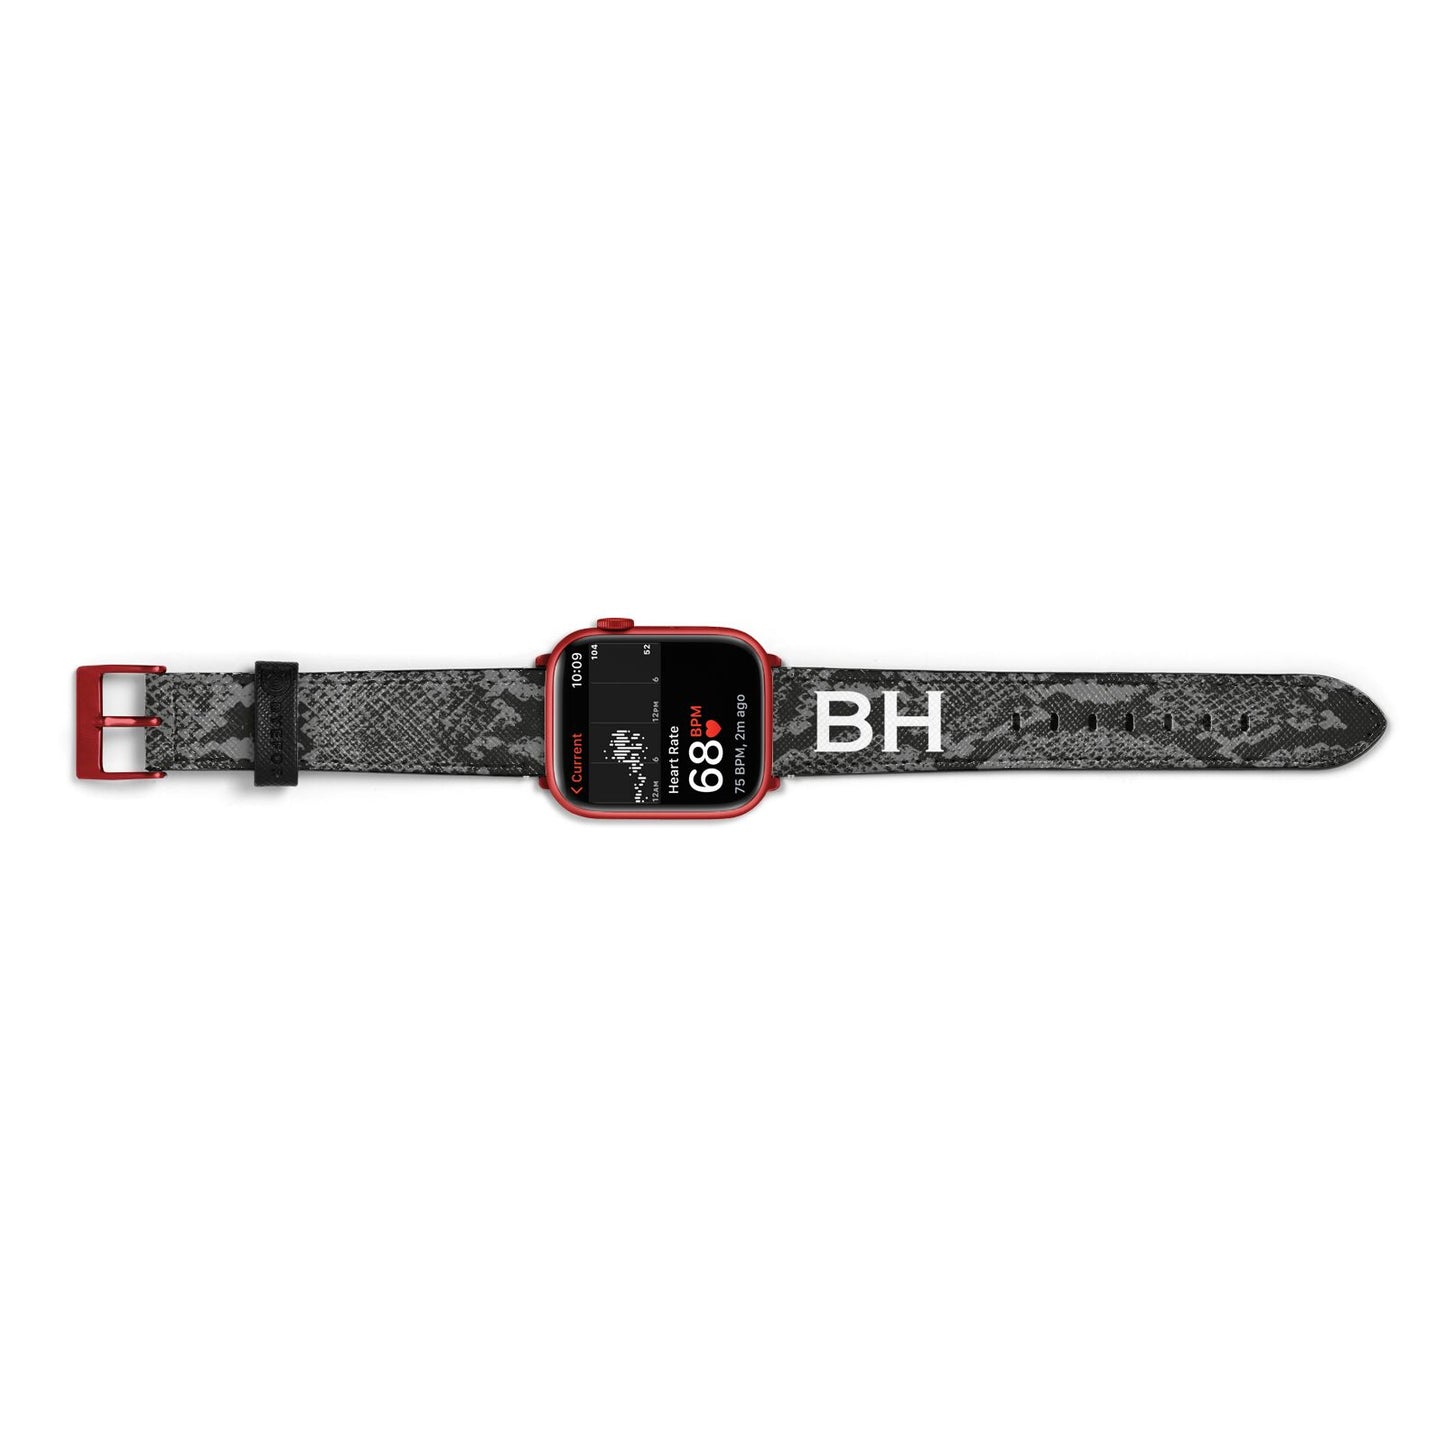 Personalised Snakeskin Apple Watch Strap Size 38mm Landscape Image Red Hardware